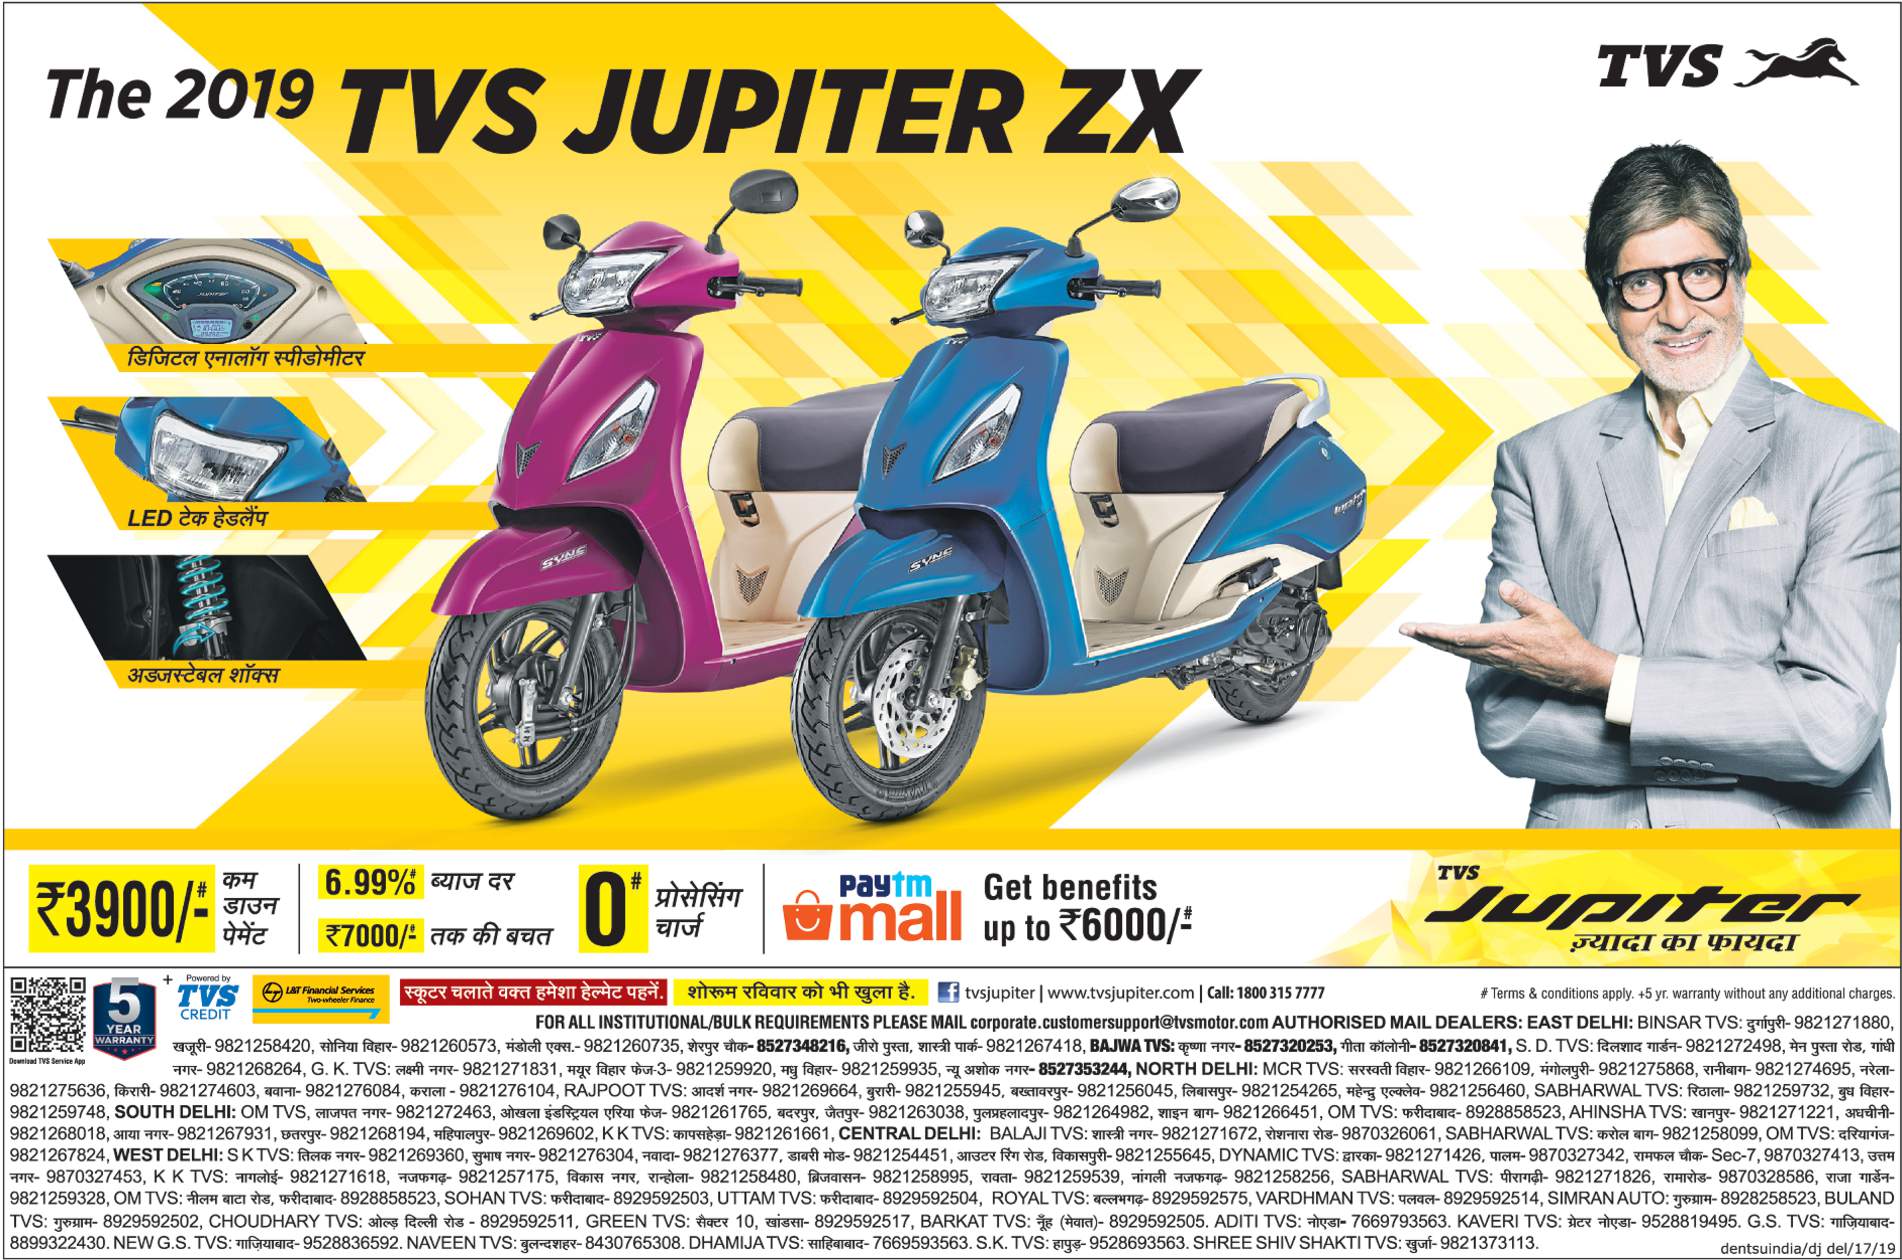 tvs-jupiter-zx-bike-the-2019-get-benefits-upto-rs-6000-ad-dainik-jagran-delhi-20-06-2019.jpg